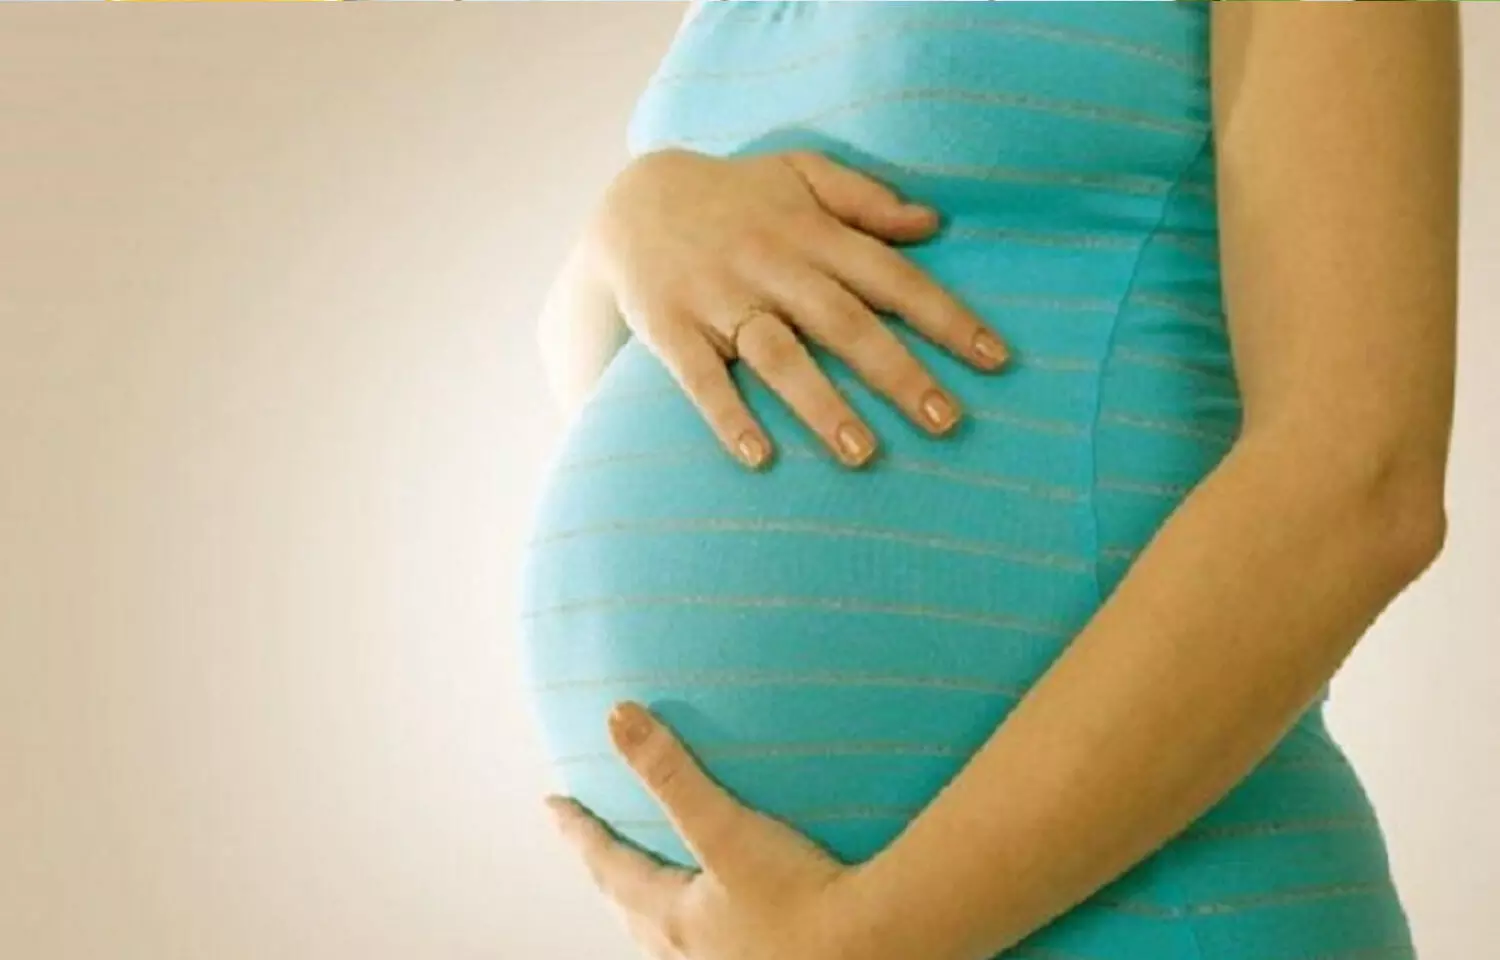 Poor iodine levels in women may risk fetal intellectual development in pregnancy